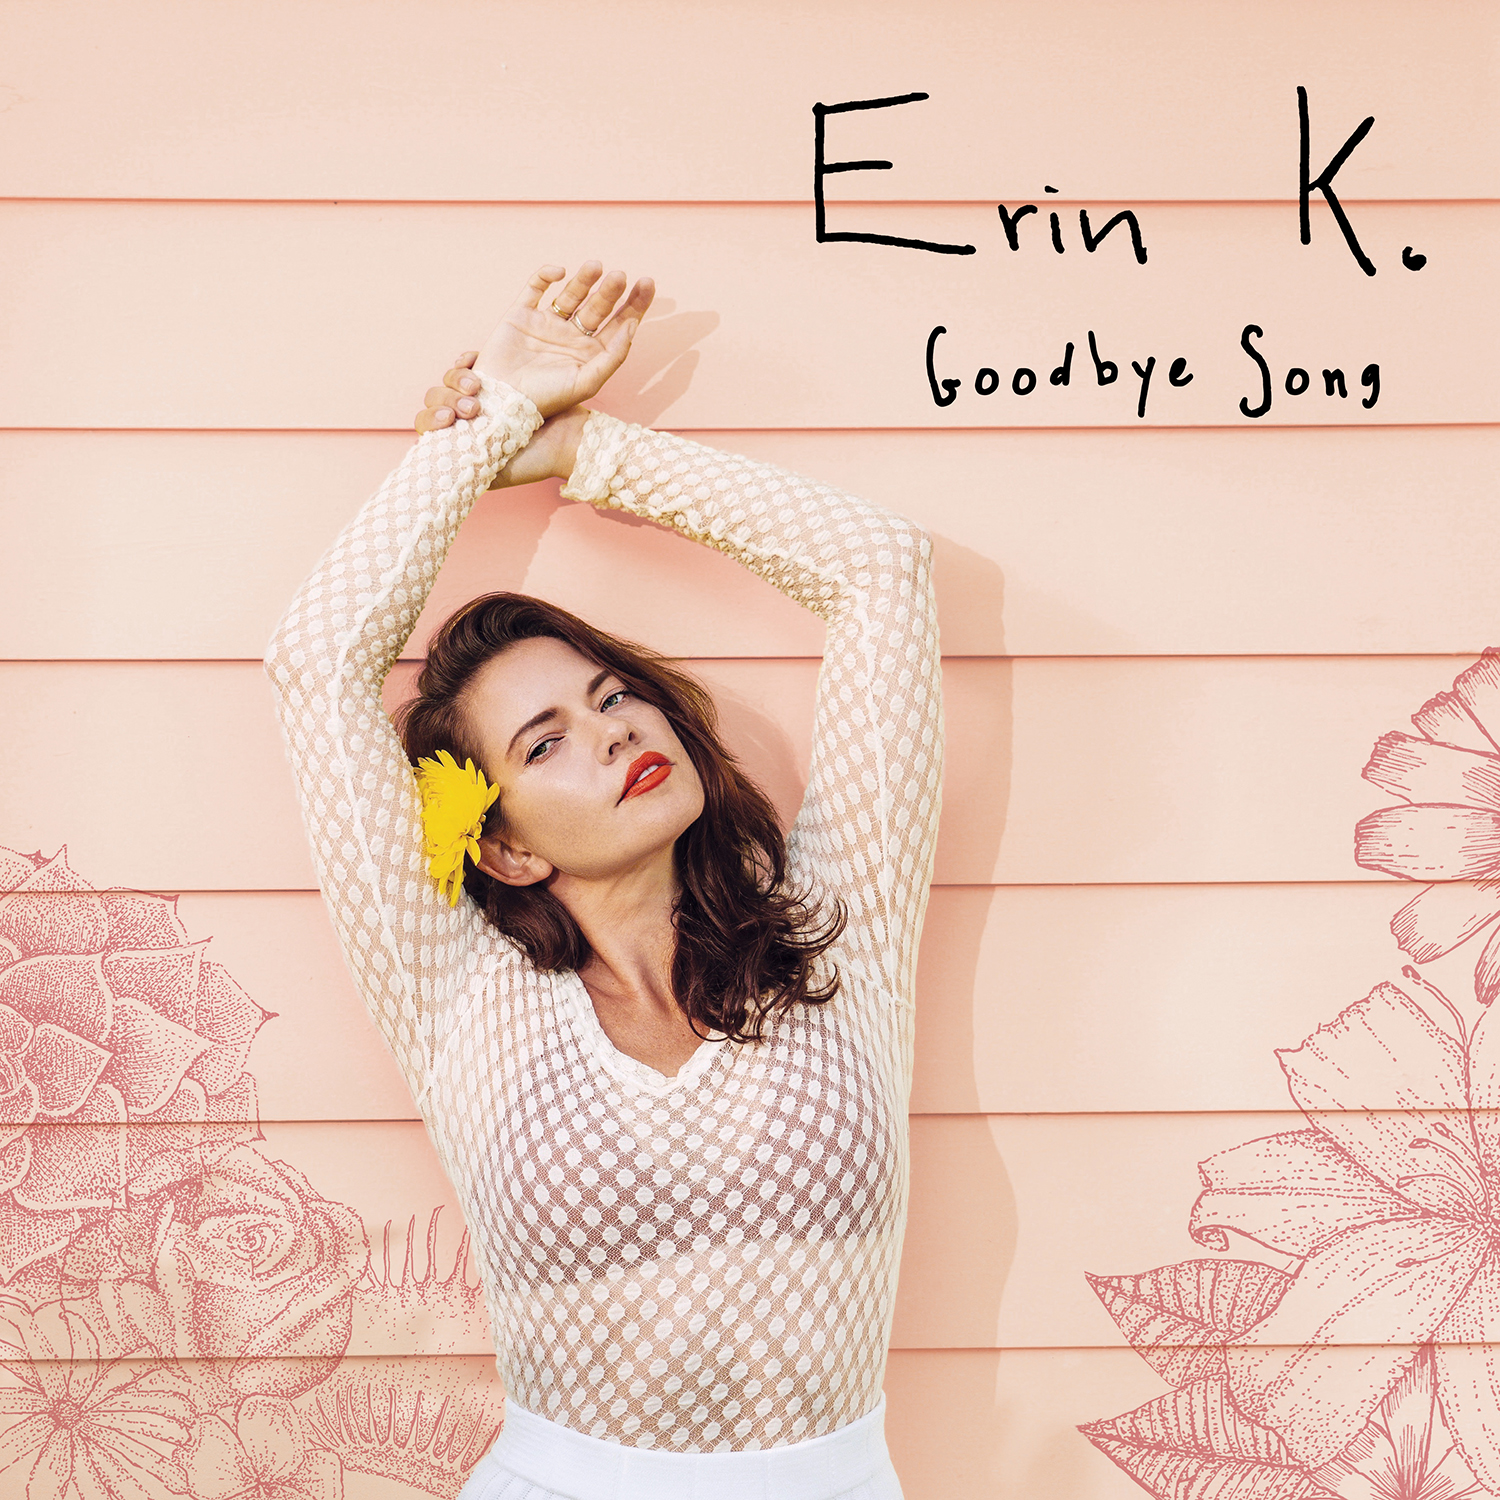 Erin K "Goodbye Song" Single Artwork